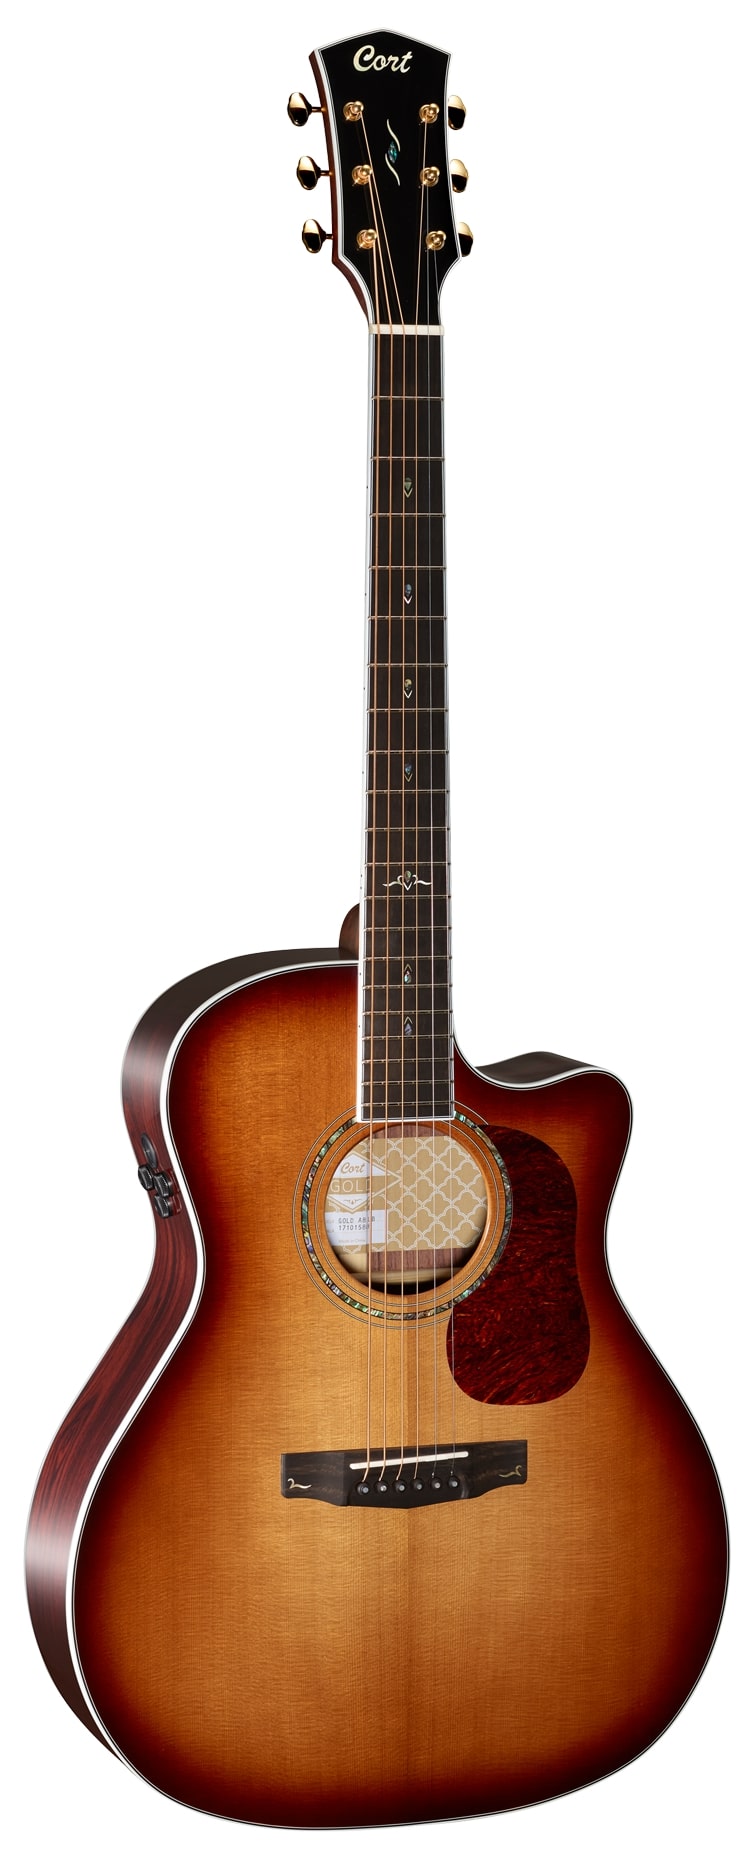 Электроакустические гитары Cort Gold-A8-WCASE-LB (чехол в комплекте) электрогитары cort sunset nylectric bk wbag чехол в комплекте